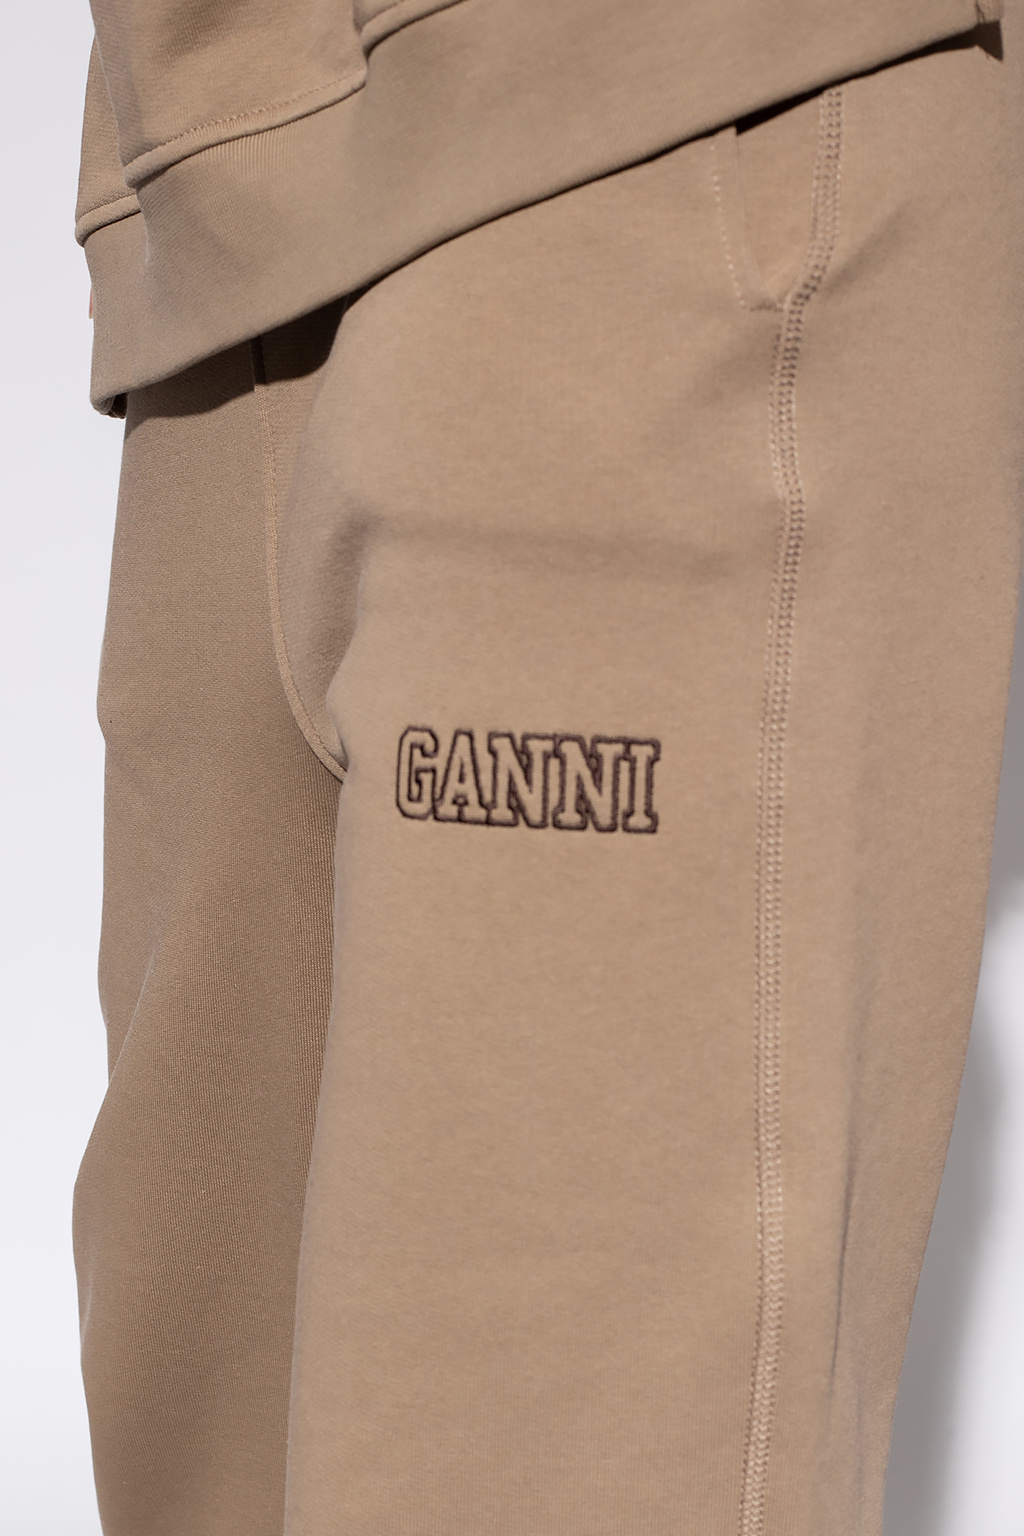 Ganni Dion Lee high-rise baggy cargo pants